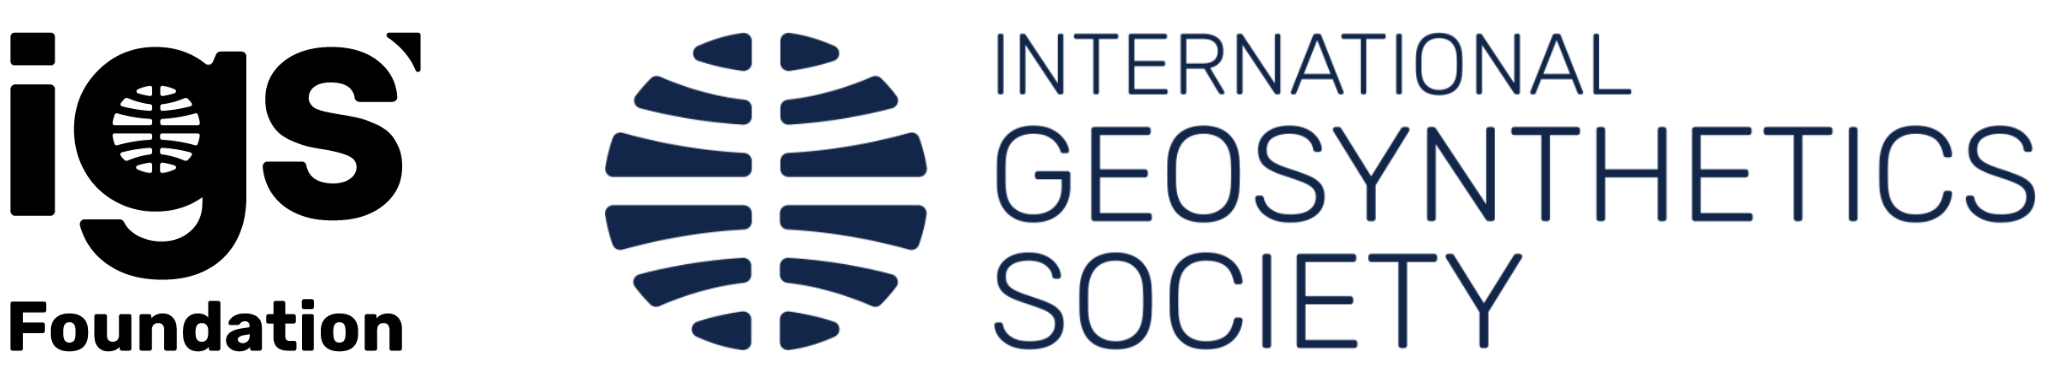 IGS-Foundation IGS Logos